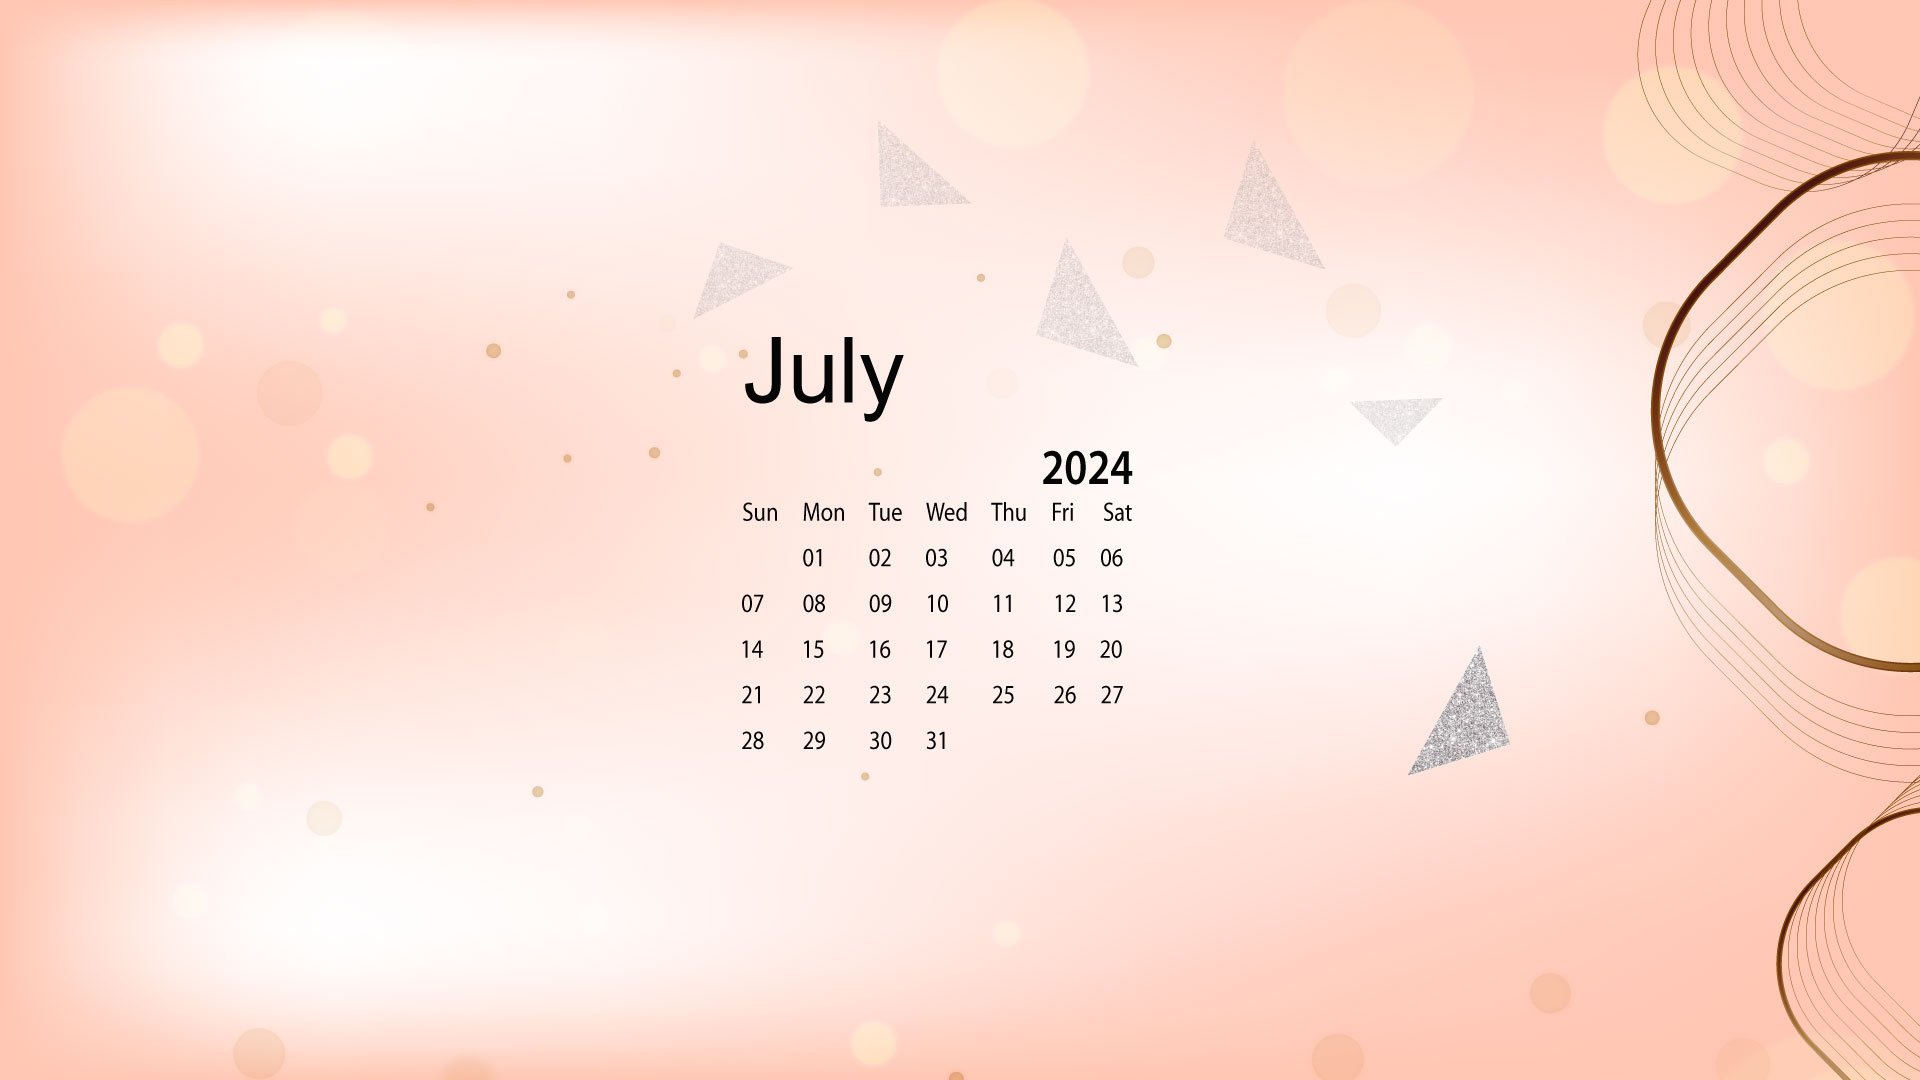 July 2024 Desktop Wallpaper Calendar - Calendarlabs with regard to July Calendar 2024 Background